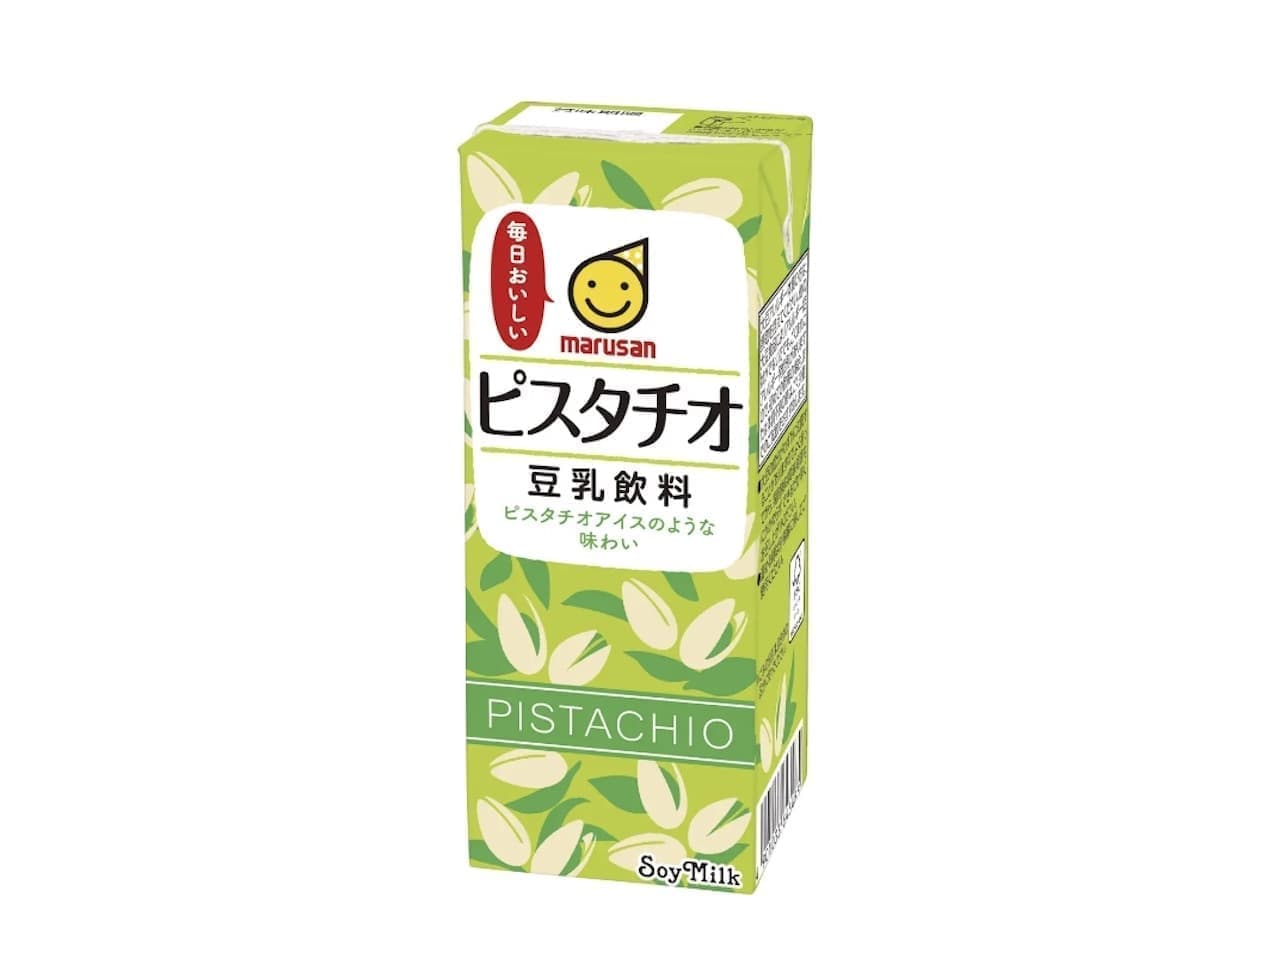 Marusanai "Soy milk drink pistachio